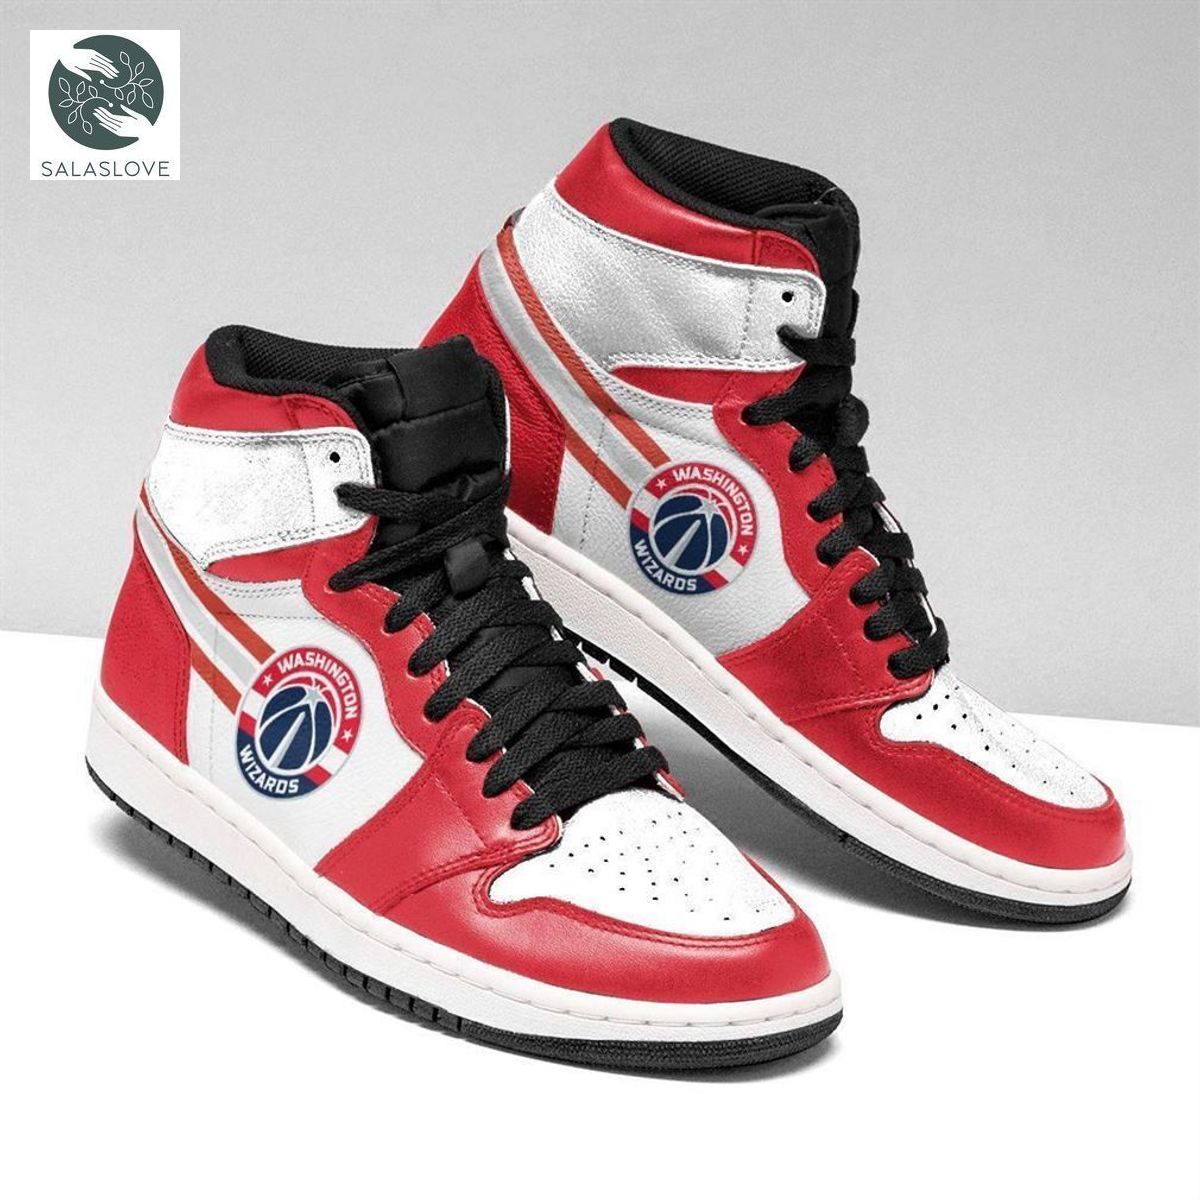 Washington Wizards Nba Sneakers Air Jordan 11